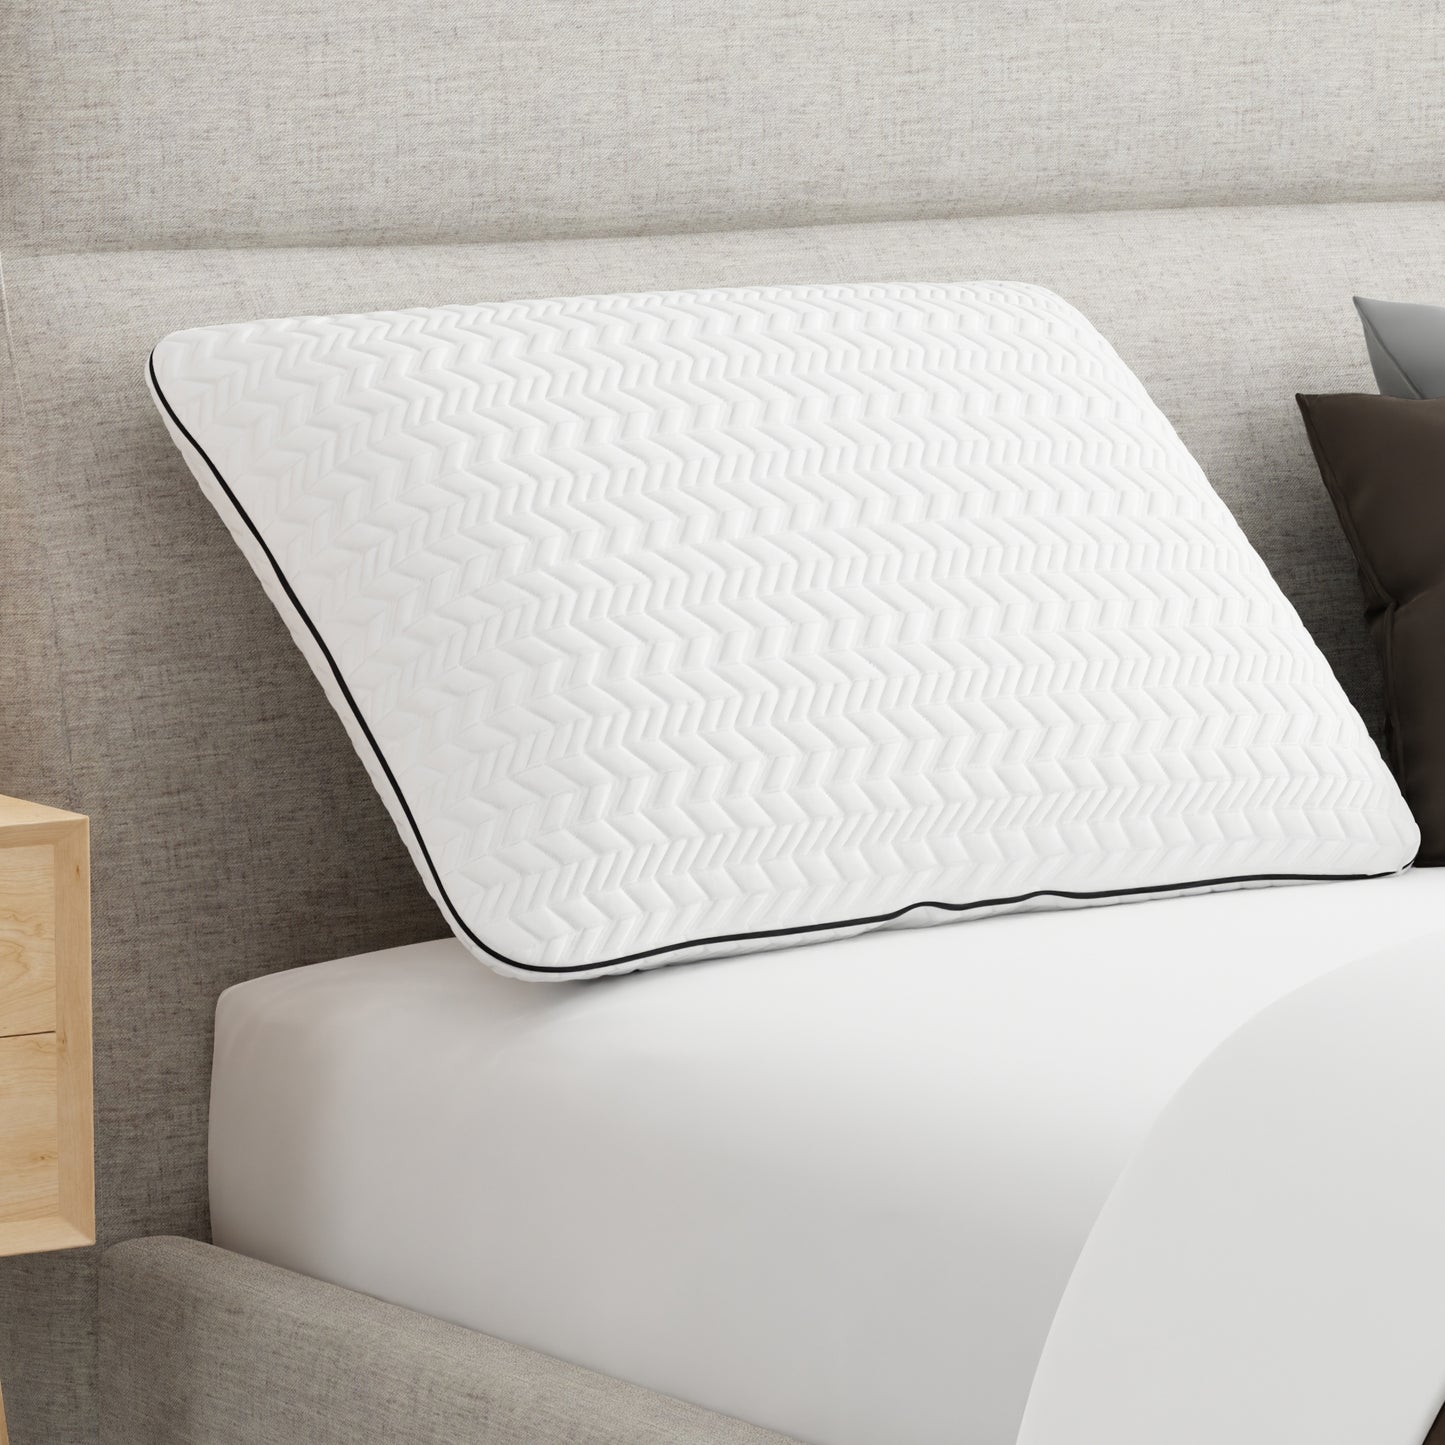 Reactive Shredded Memory Foam Pillow-Adjustable Loft Height